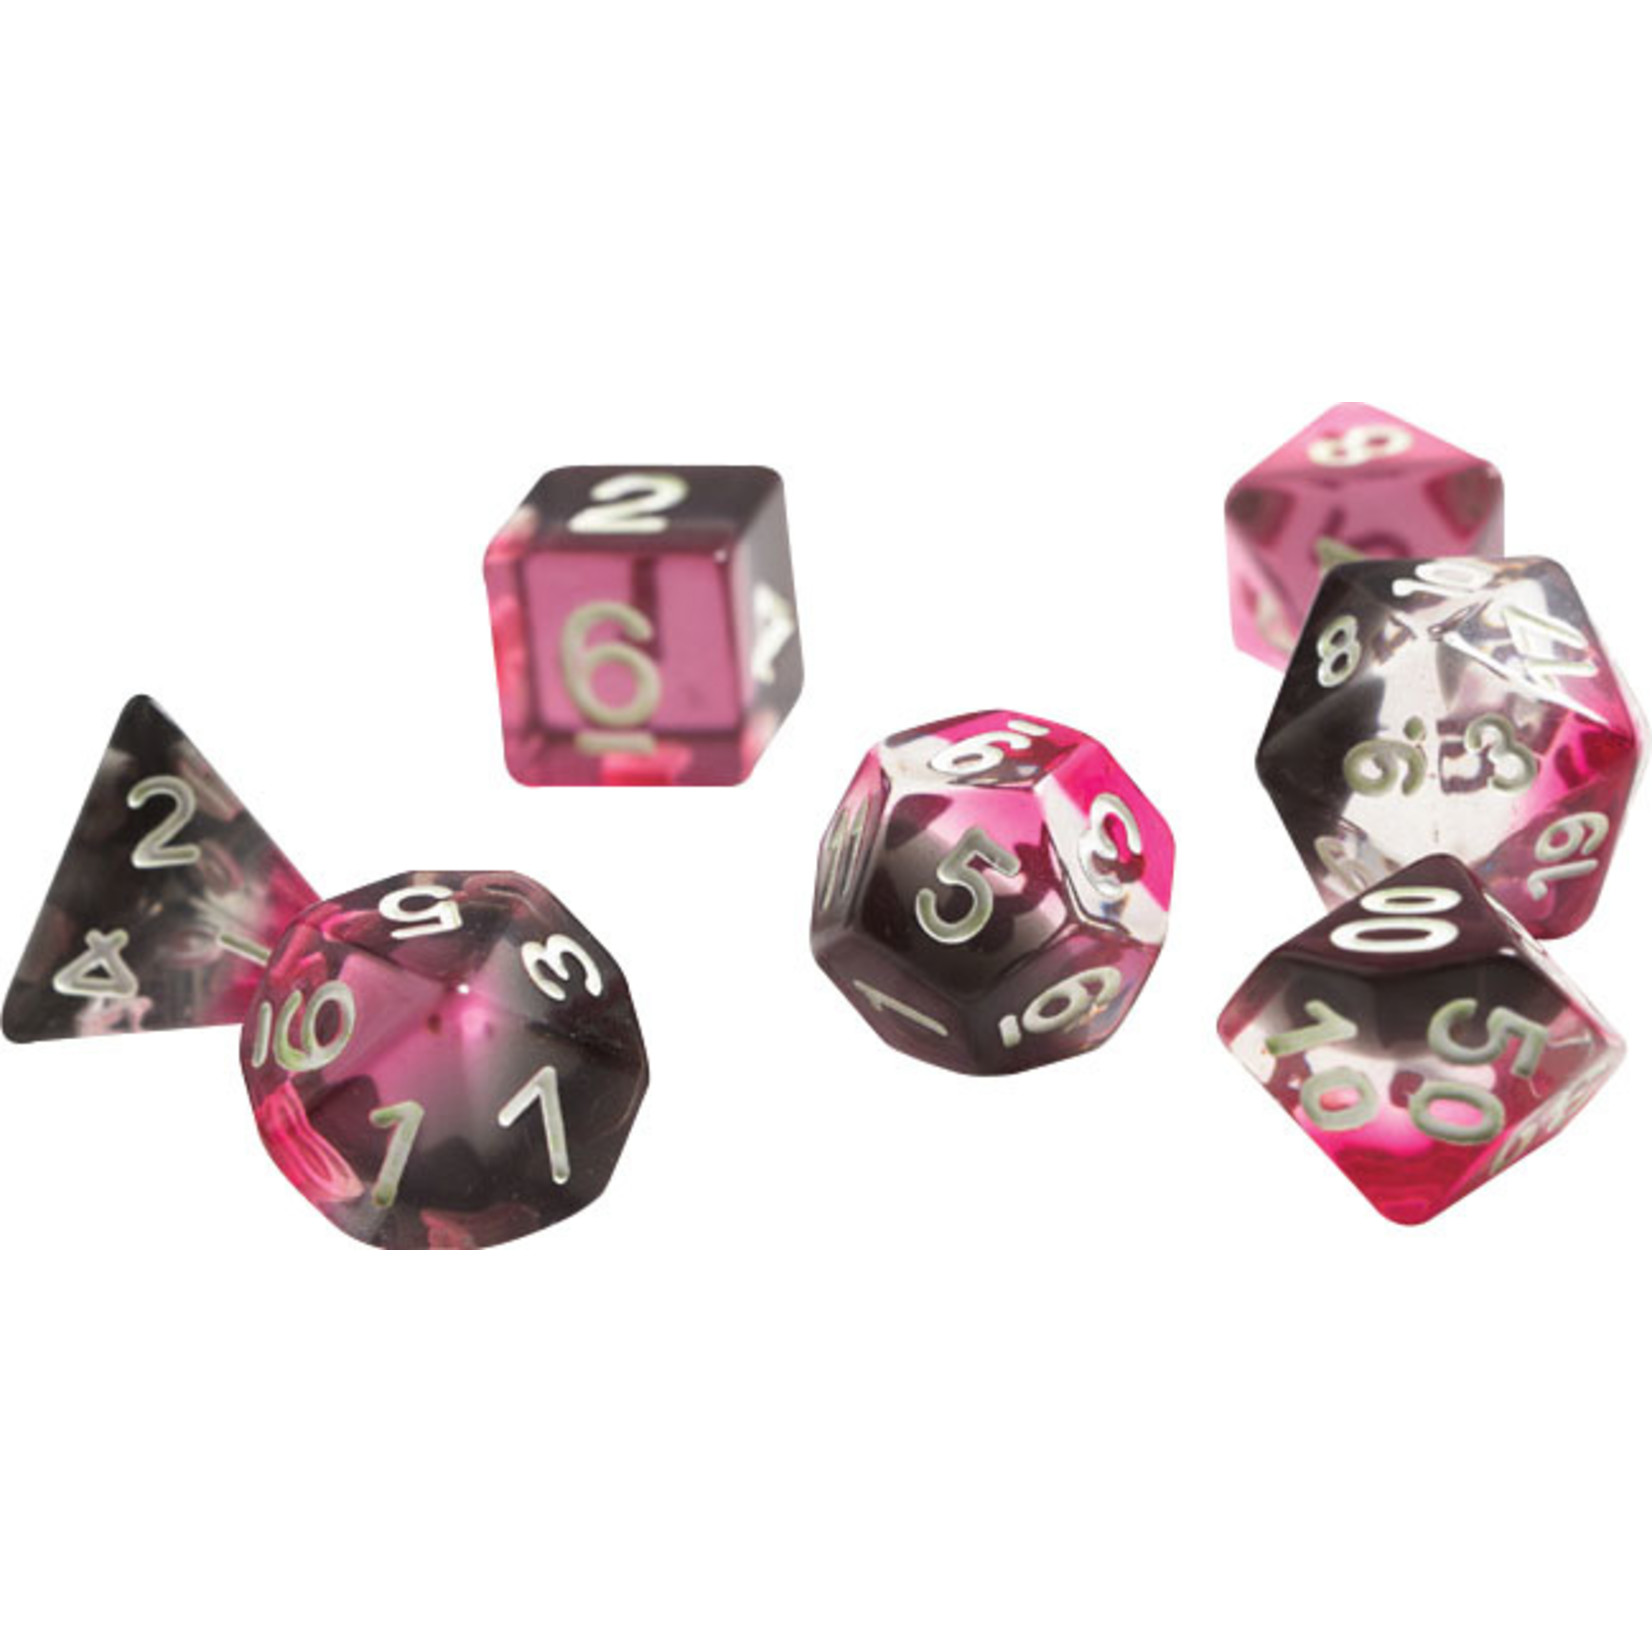 Sirius Dice RPG Dice Set (7): Pink, Clear, Black Resin